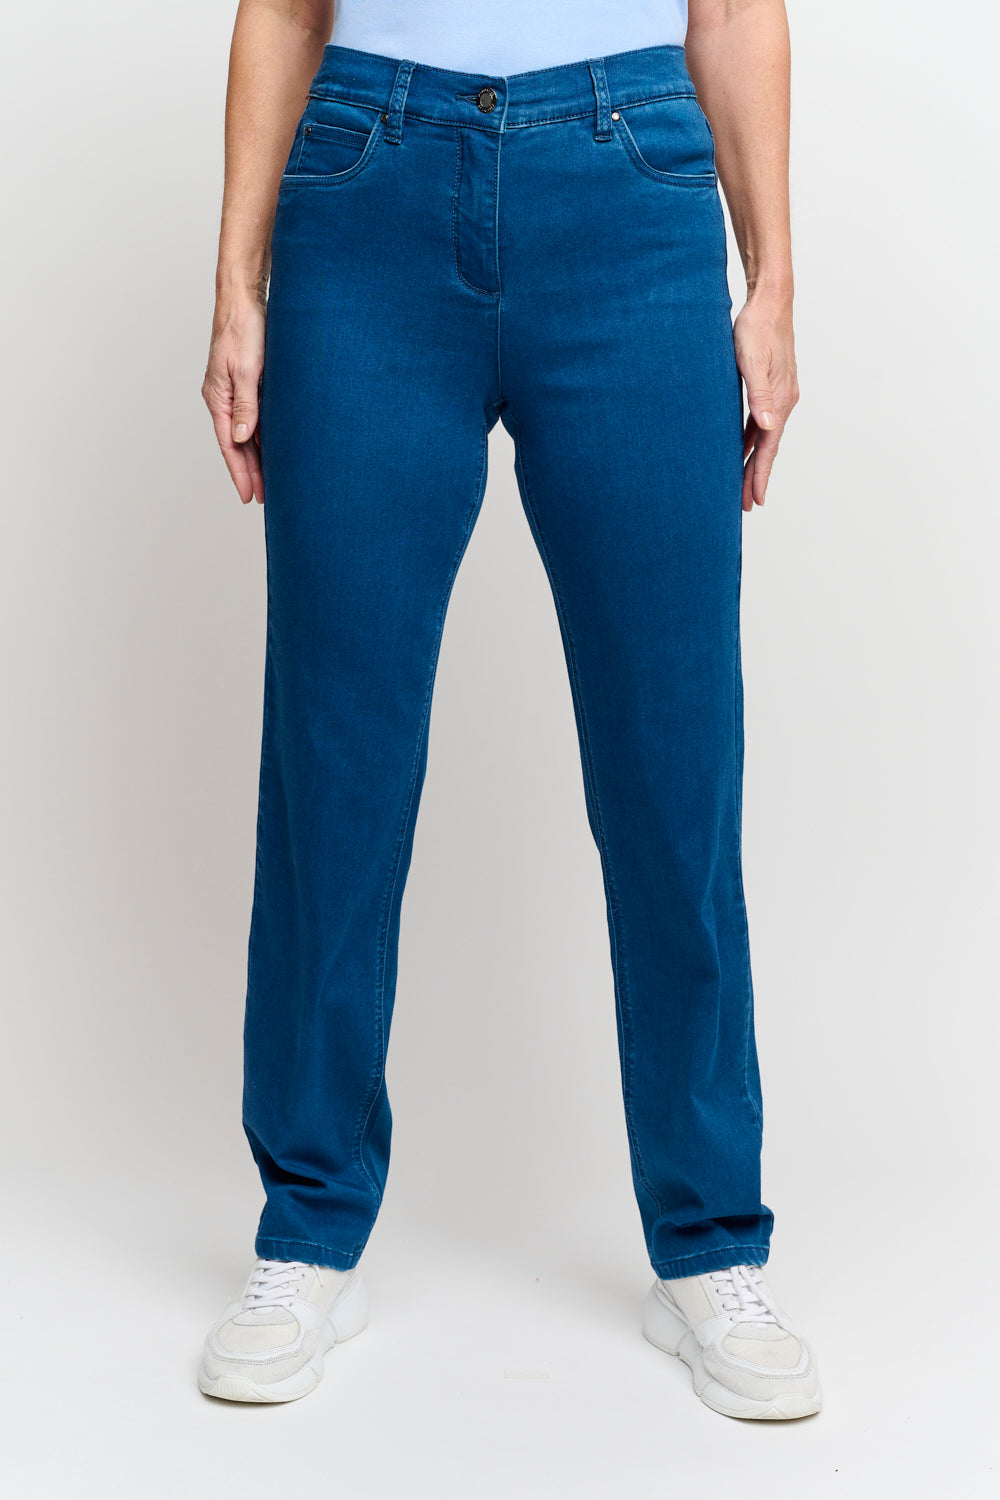 Brandtex Jeans Ingrid, 78cm